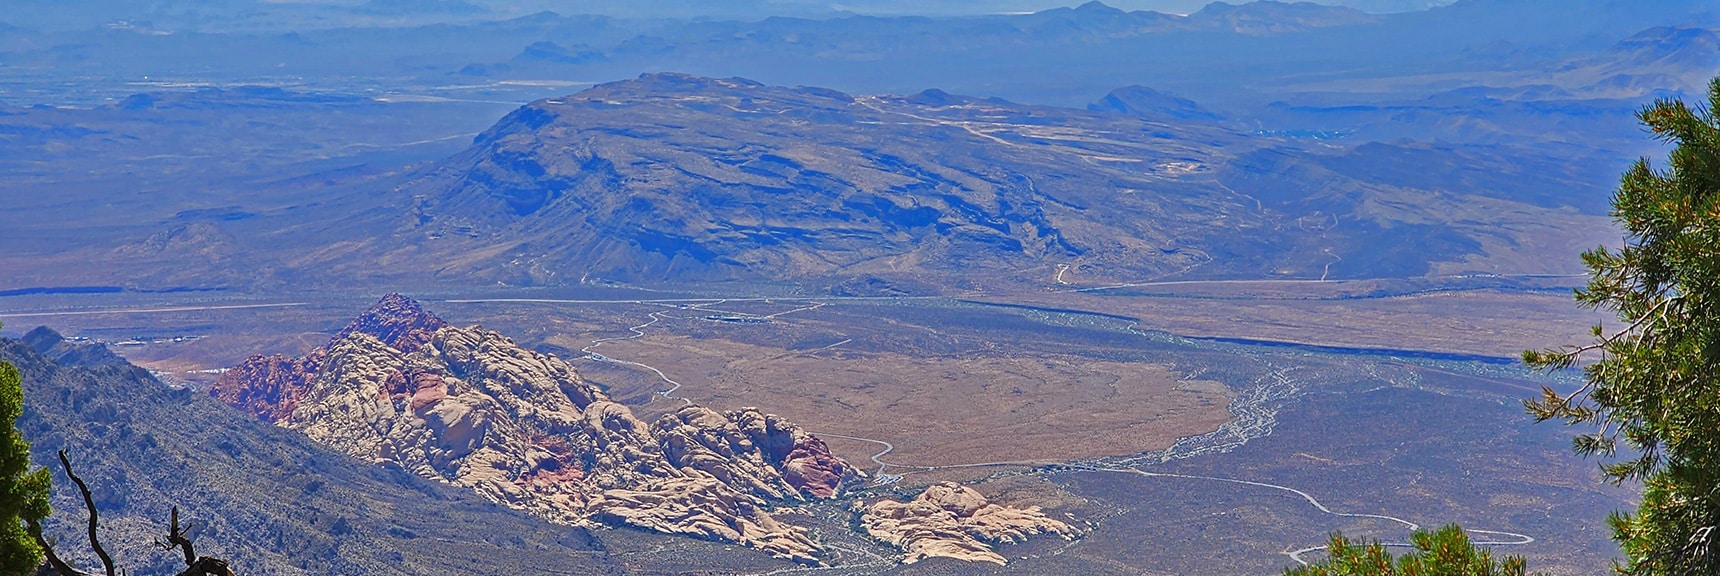 Calico Hills and Blue Diamond Mt from Burnt Peak / El Bastardo Saddle. | Kyle Canyon Grand Crossing | Northern Half | La Madre Mountains Wilderness, Nevada